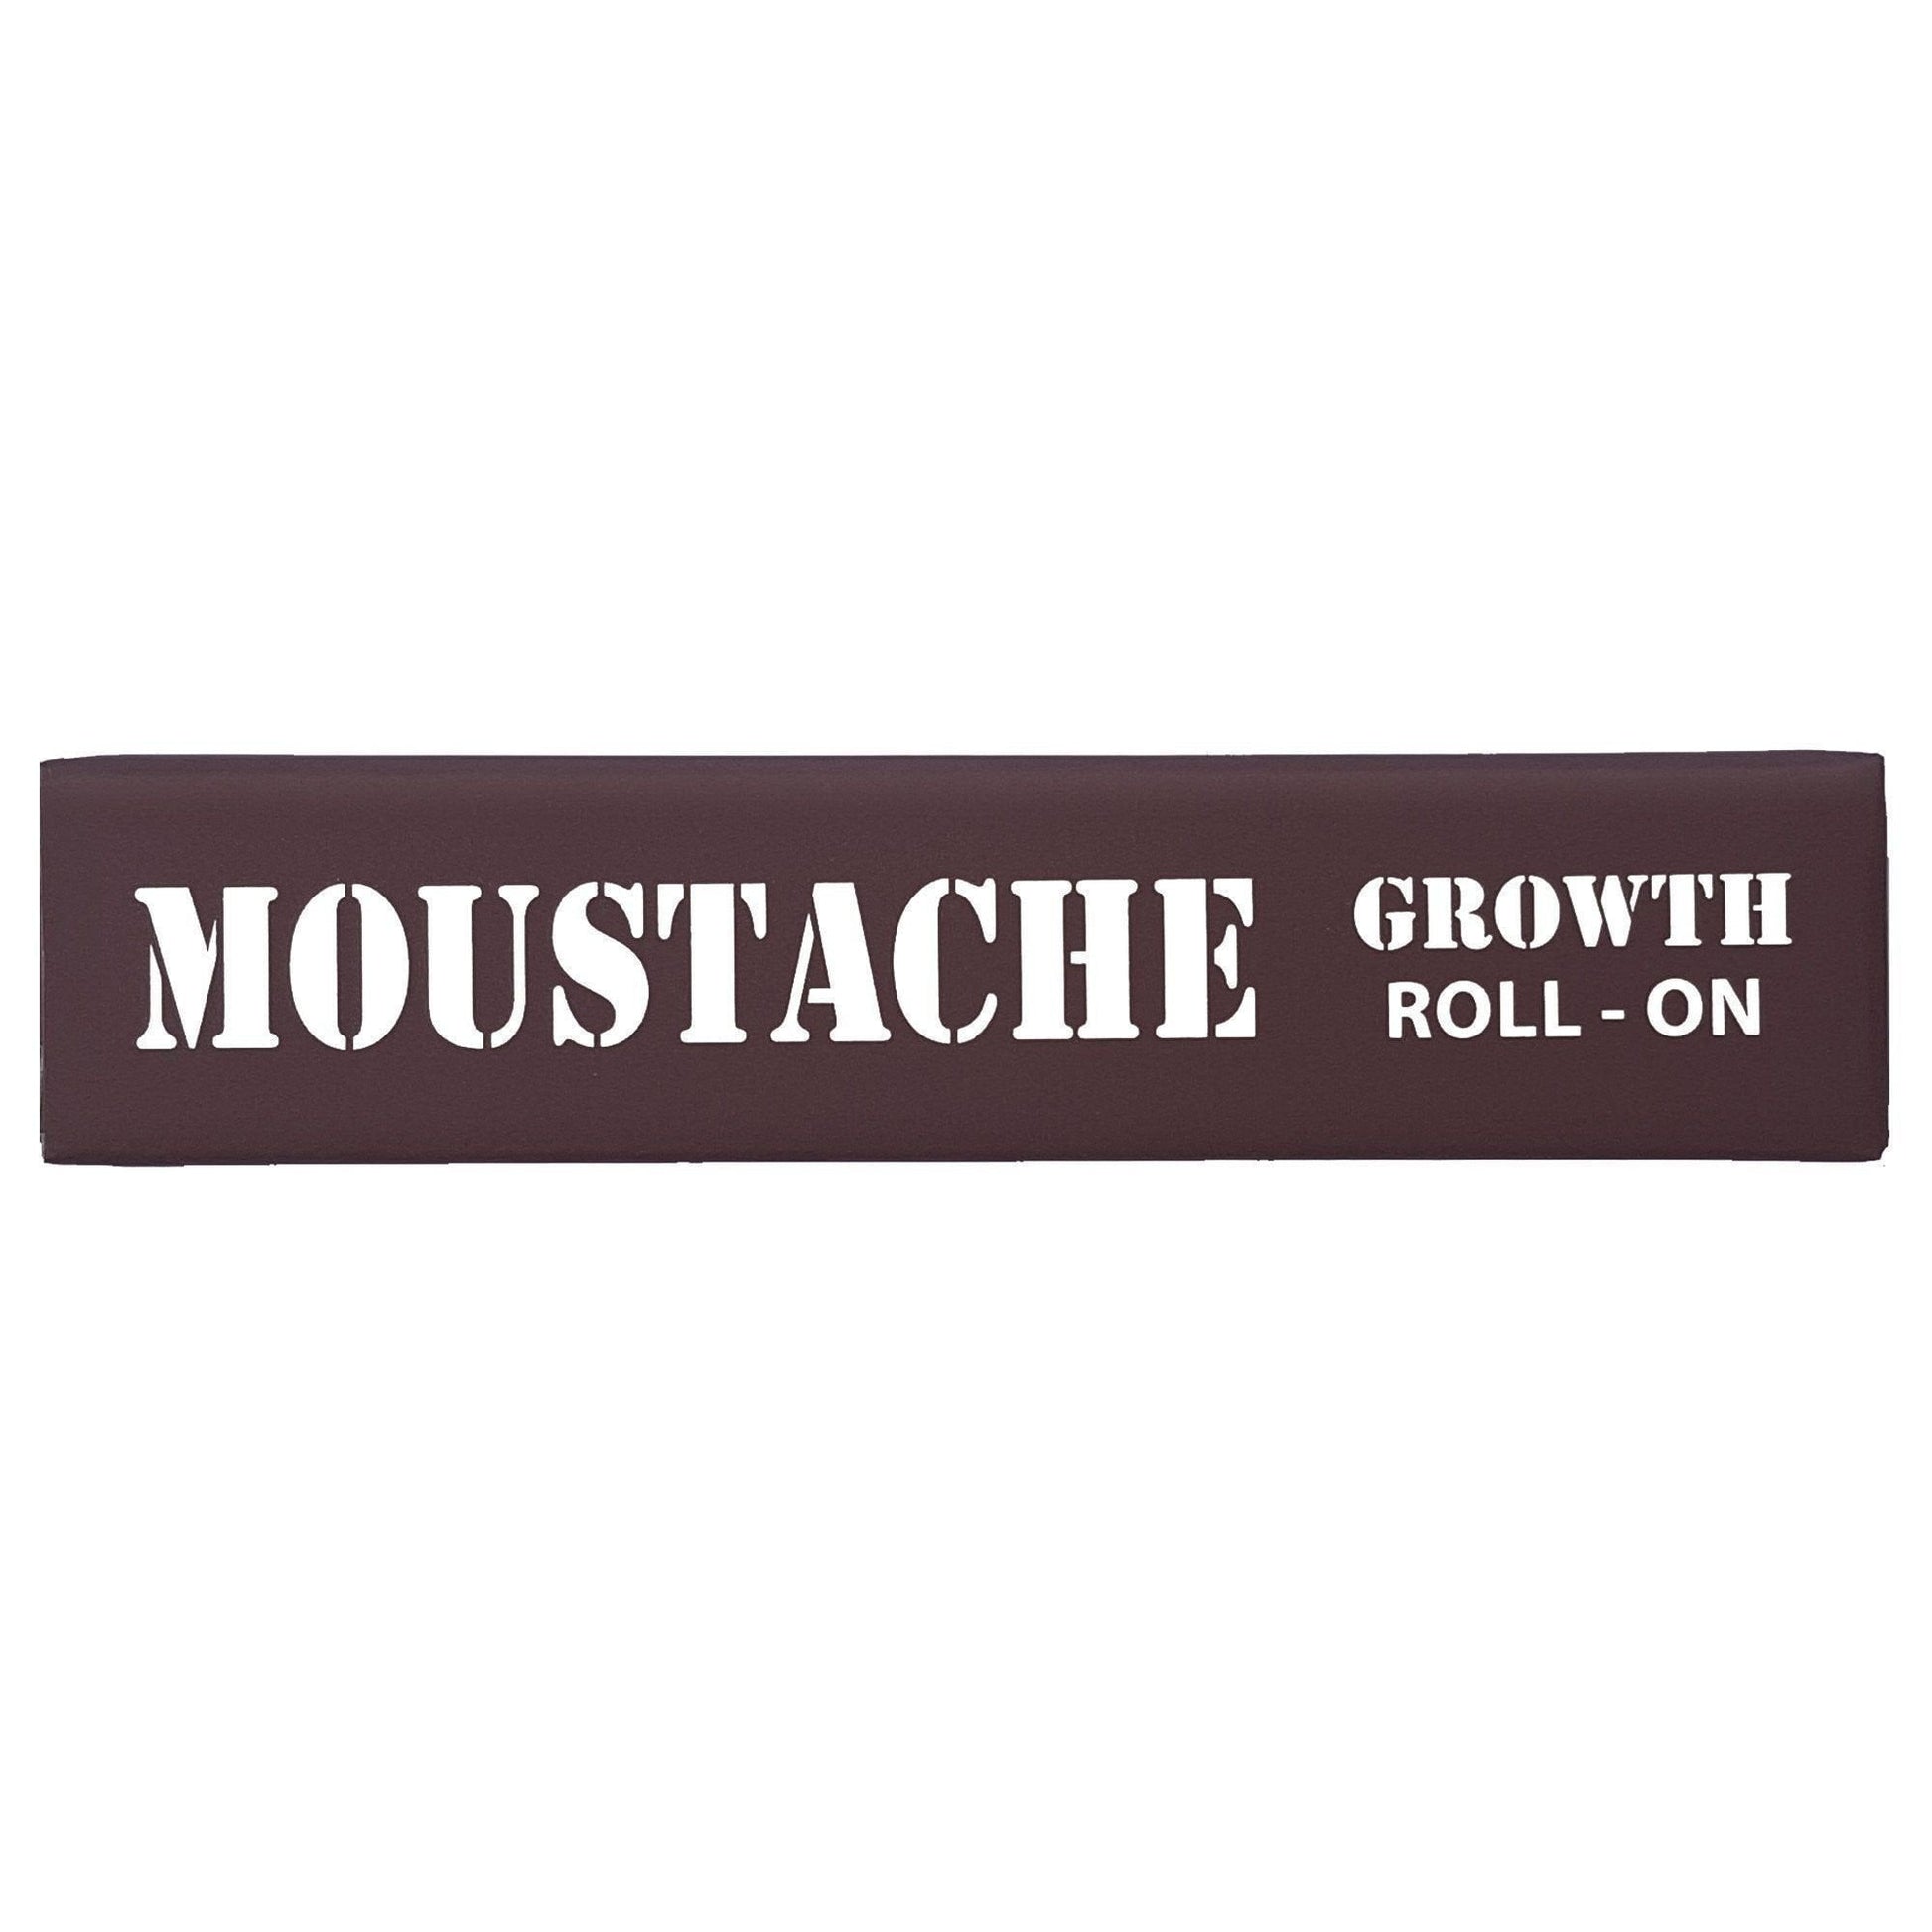 Moustache Growth Roll On - Brahma Bull - Men's Grooming